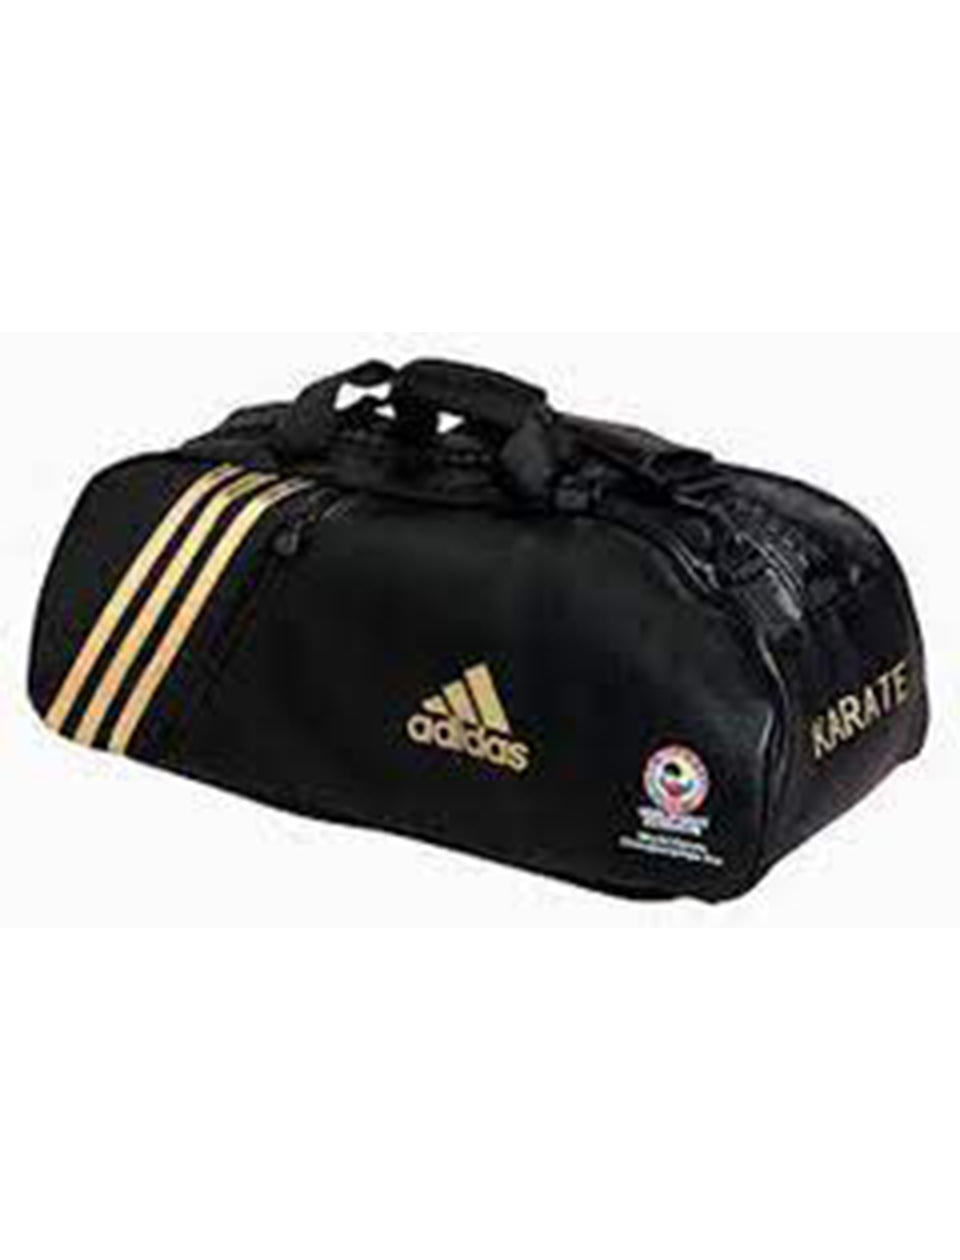 Adidas Super Sports Bag WKF, Large